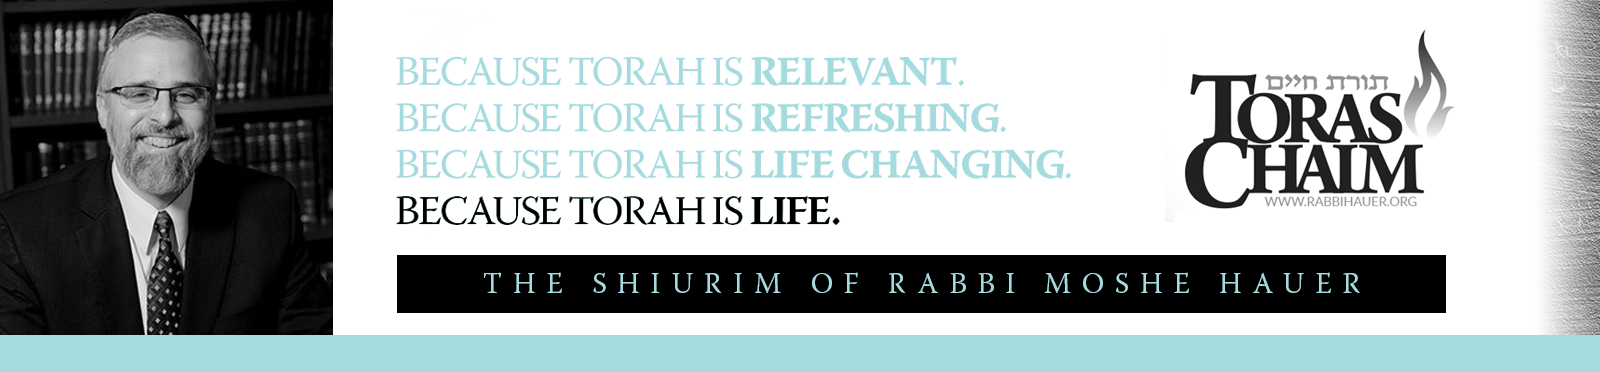 Toras Chaim - The Shiur of Rabbi Moshe Hauer